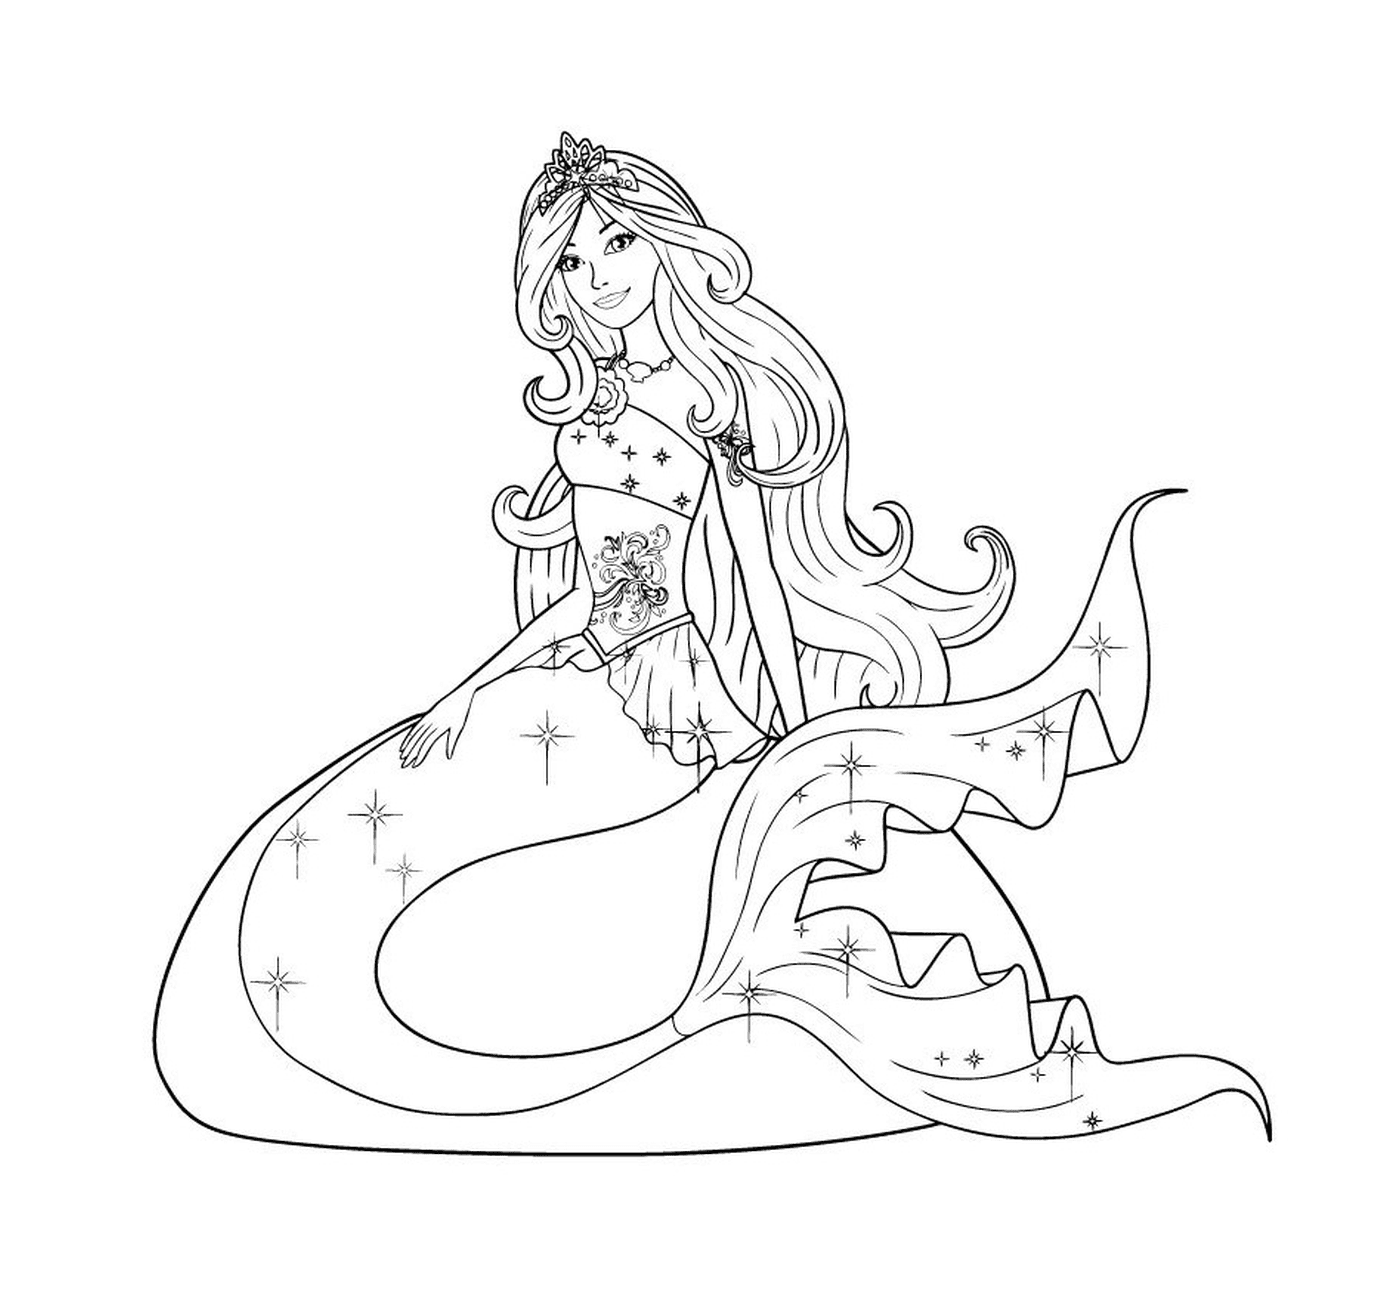  A mermaid 